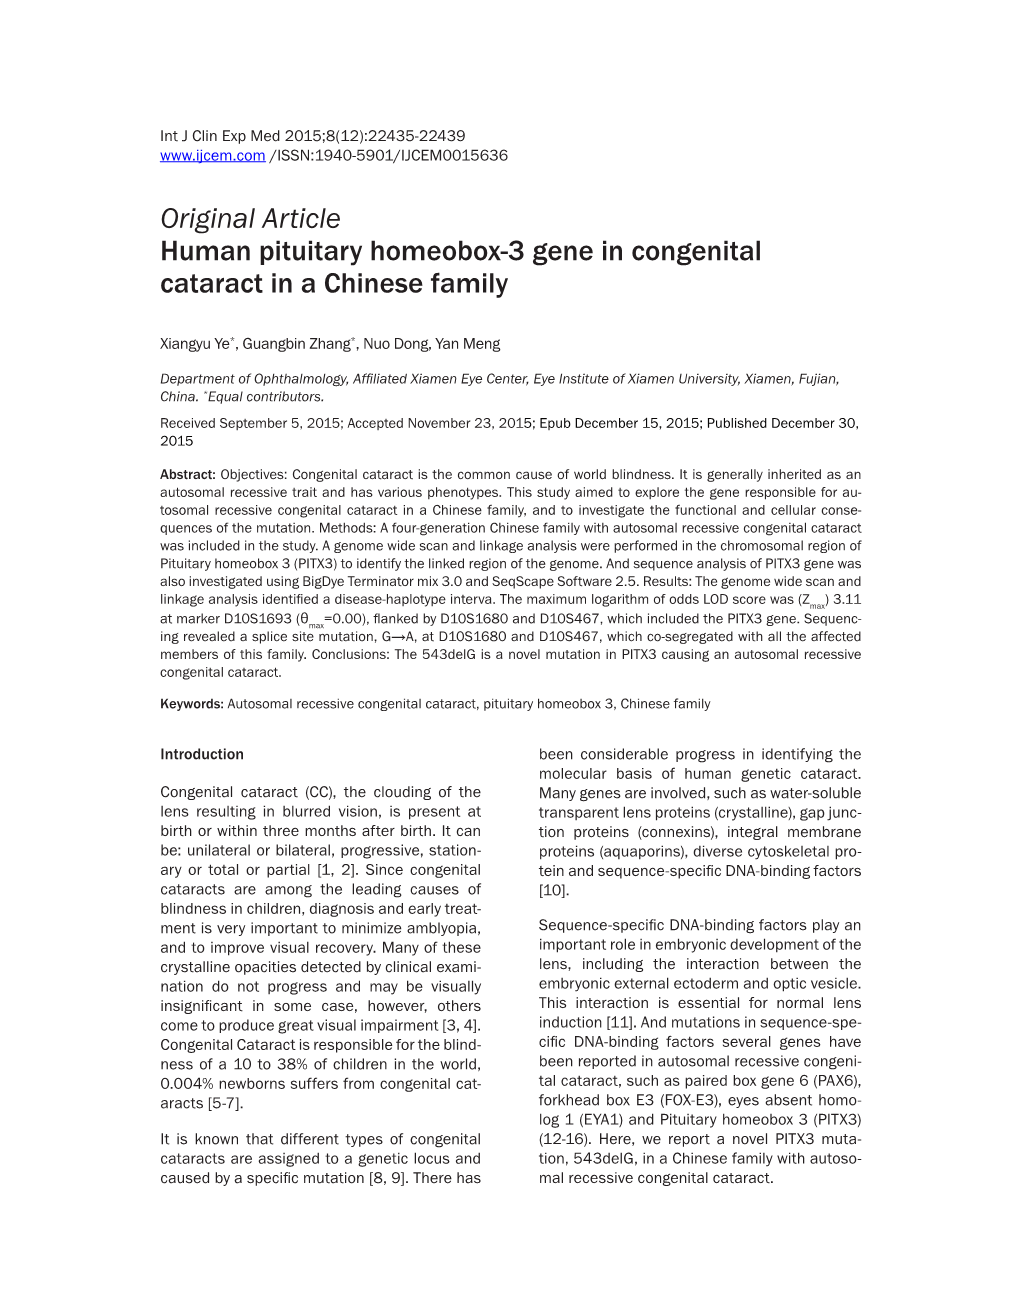 Original Article Human Pituitary Homeobox-3 Gene in Congenital Cataract in a Chinese Family